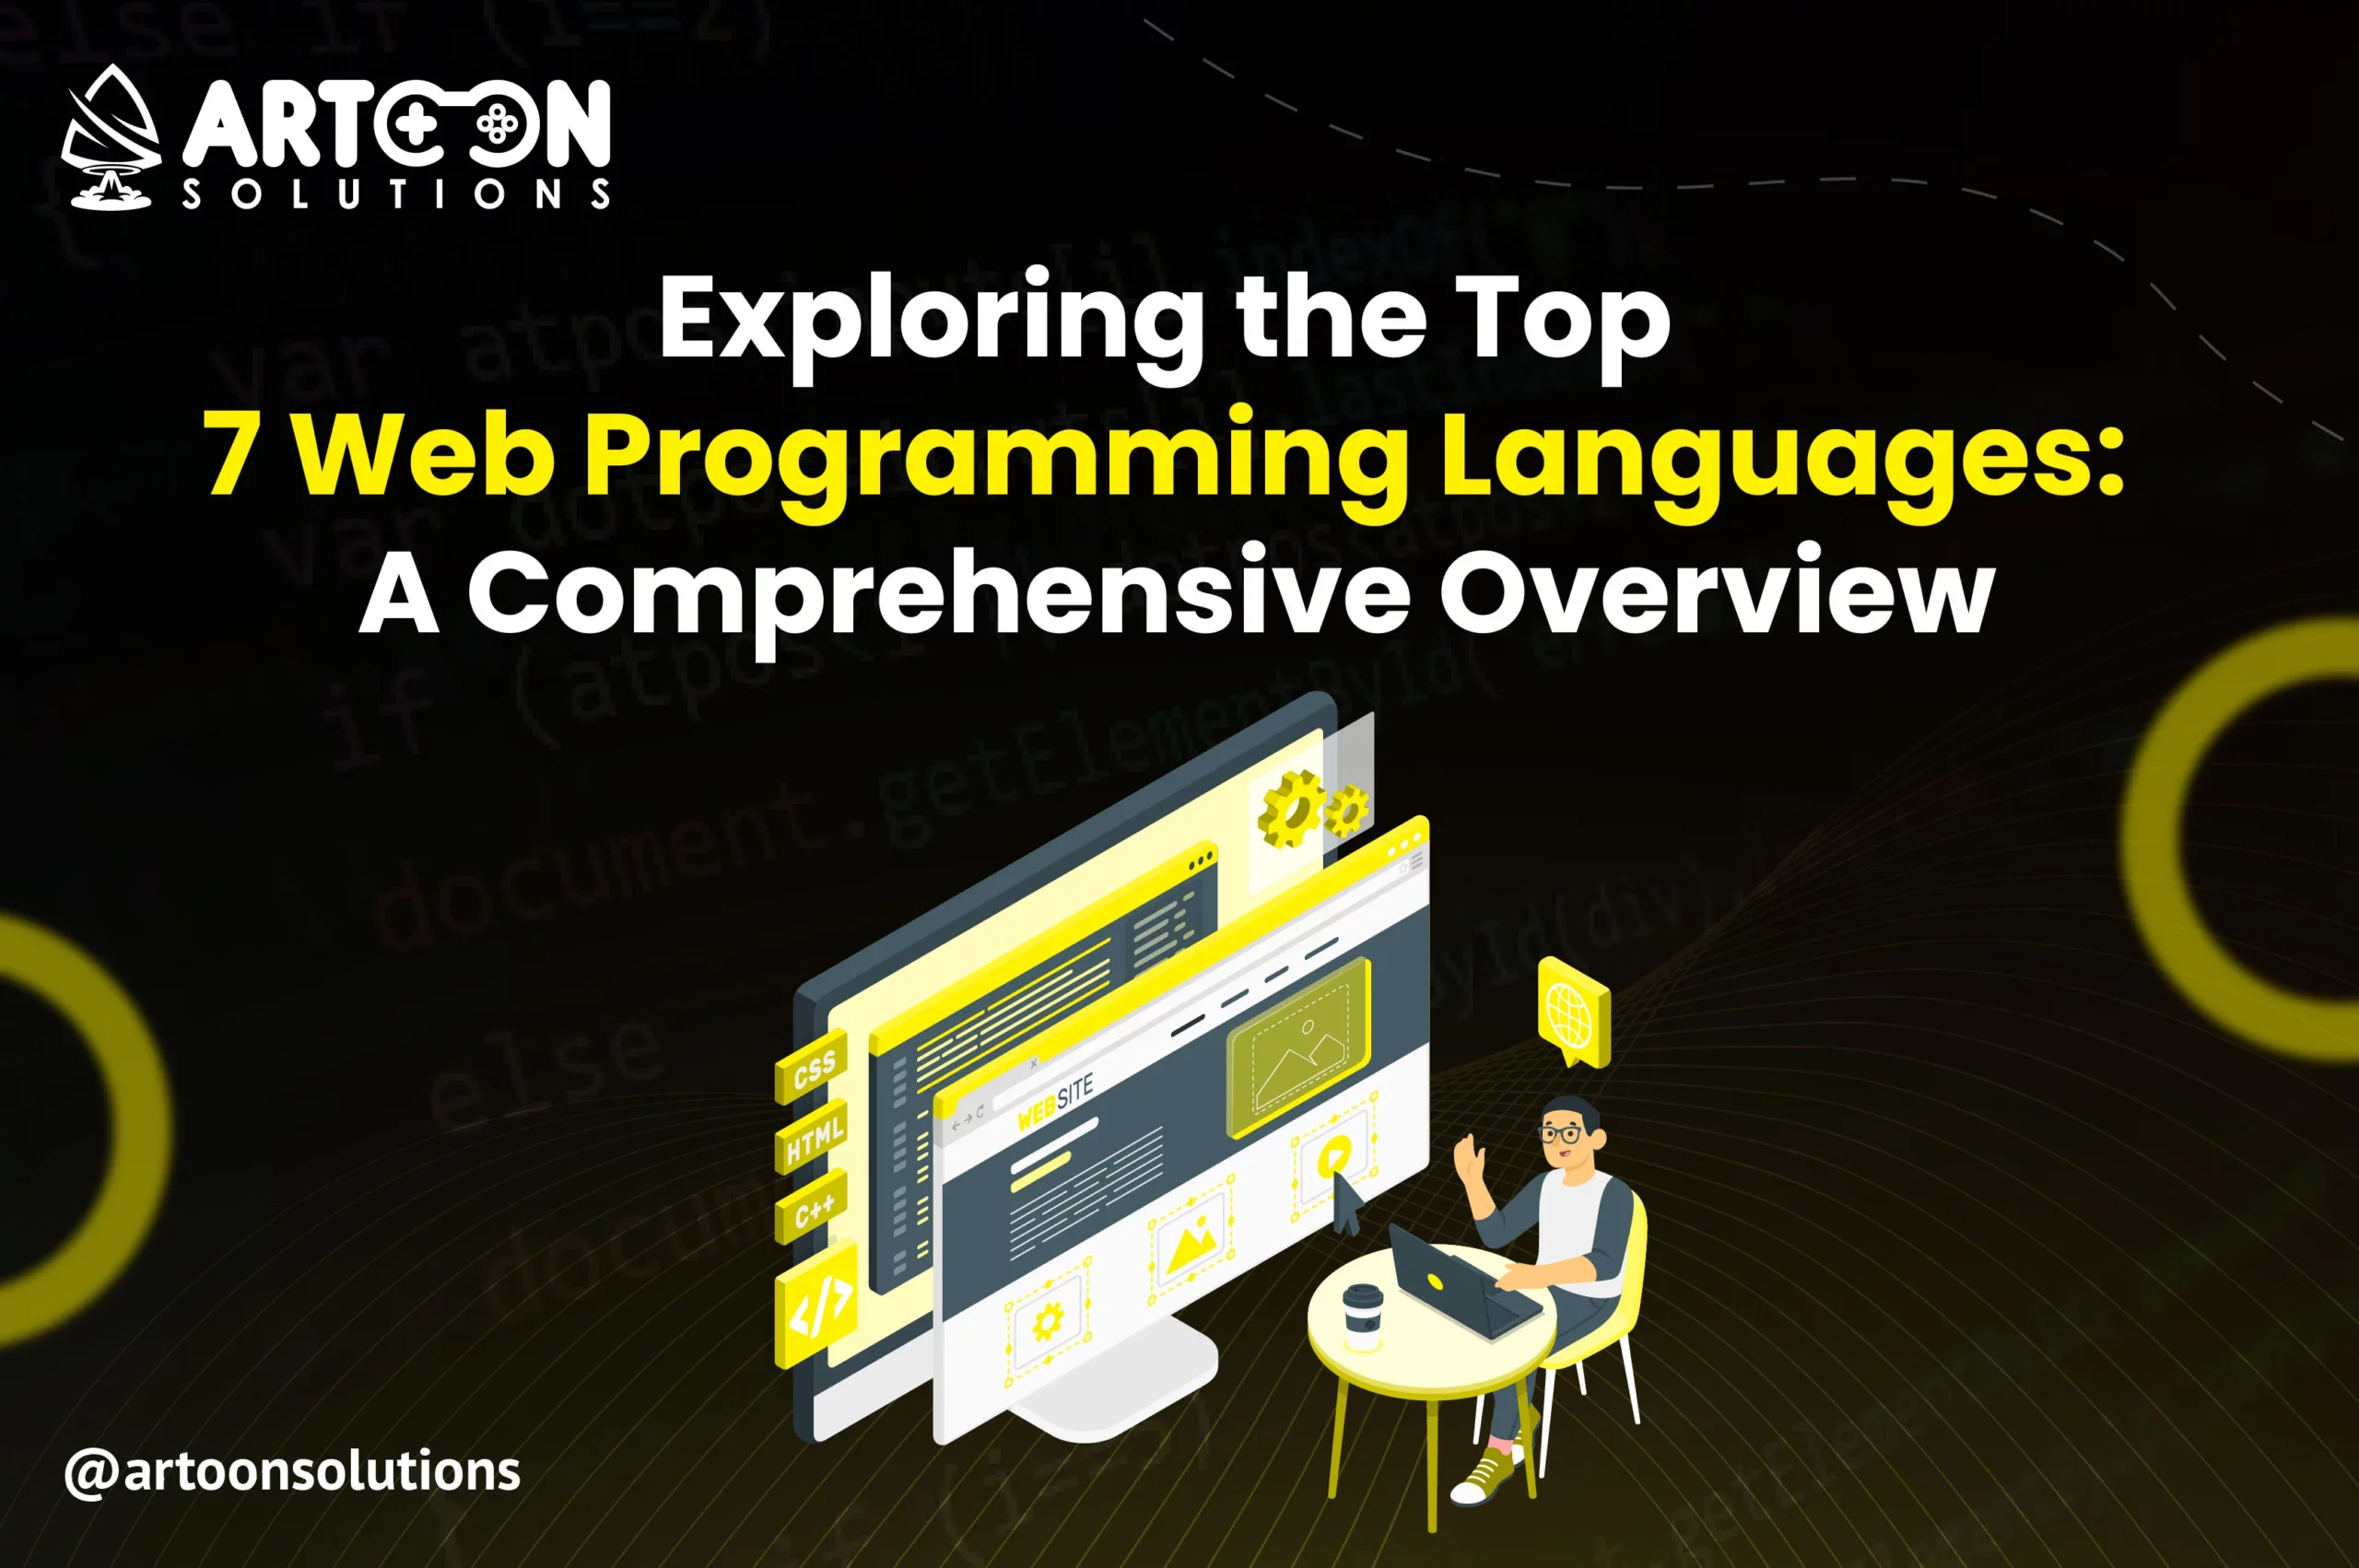 Most Popular Web Programming Languages